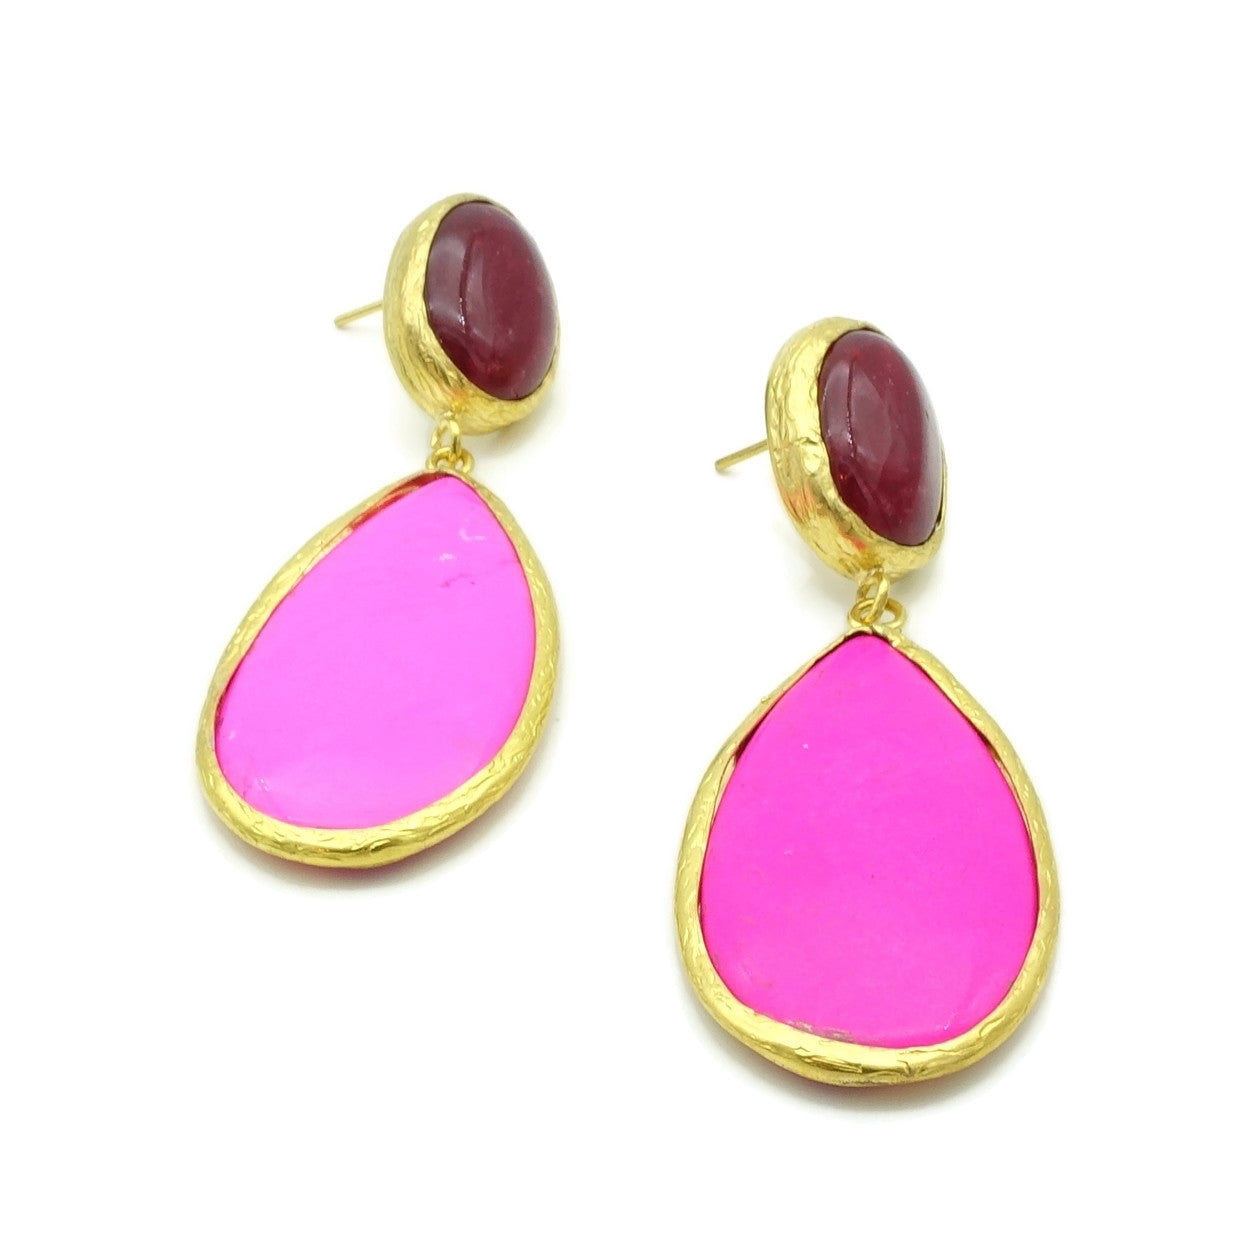 Aylas Agate, Howlite semi precious gemstone earrings - 21ct Gold plated handmade